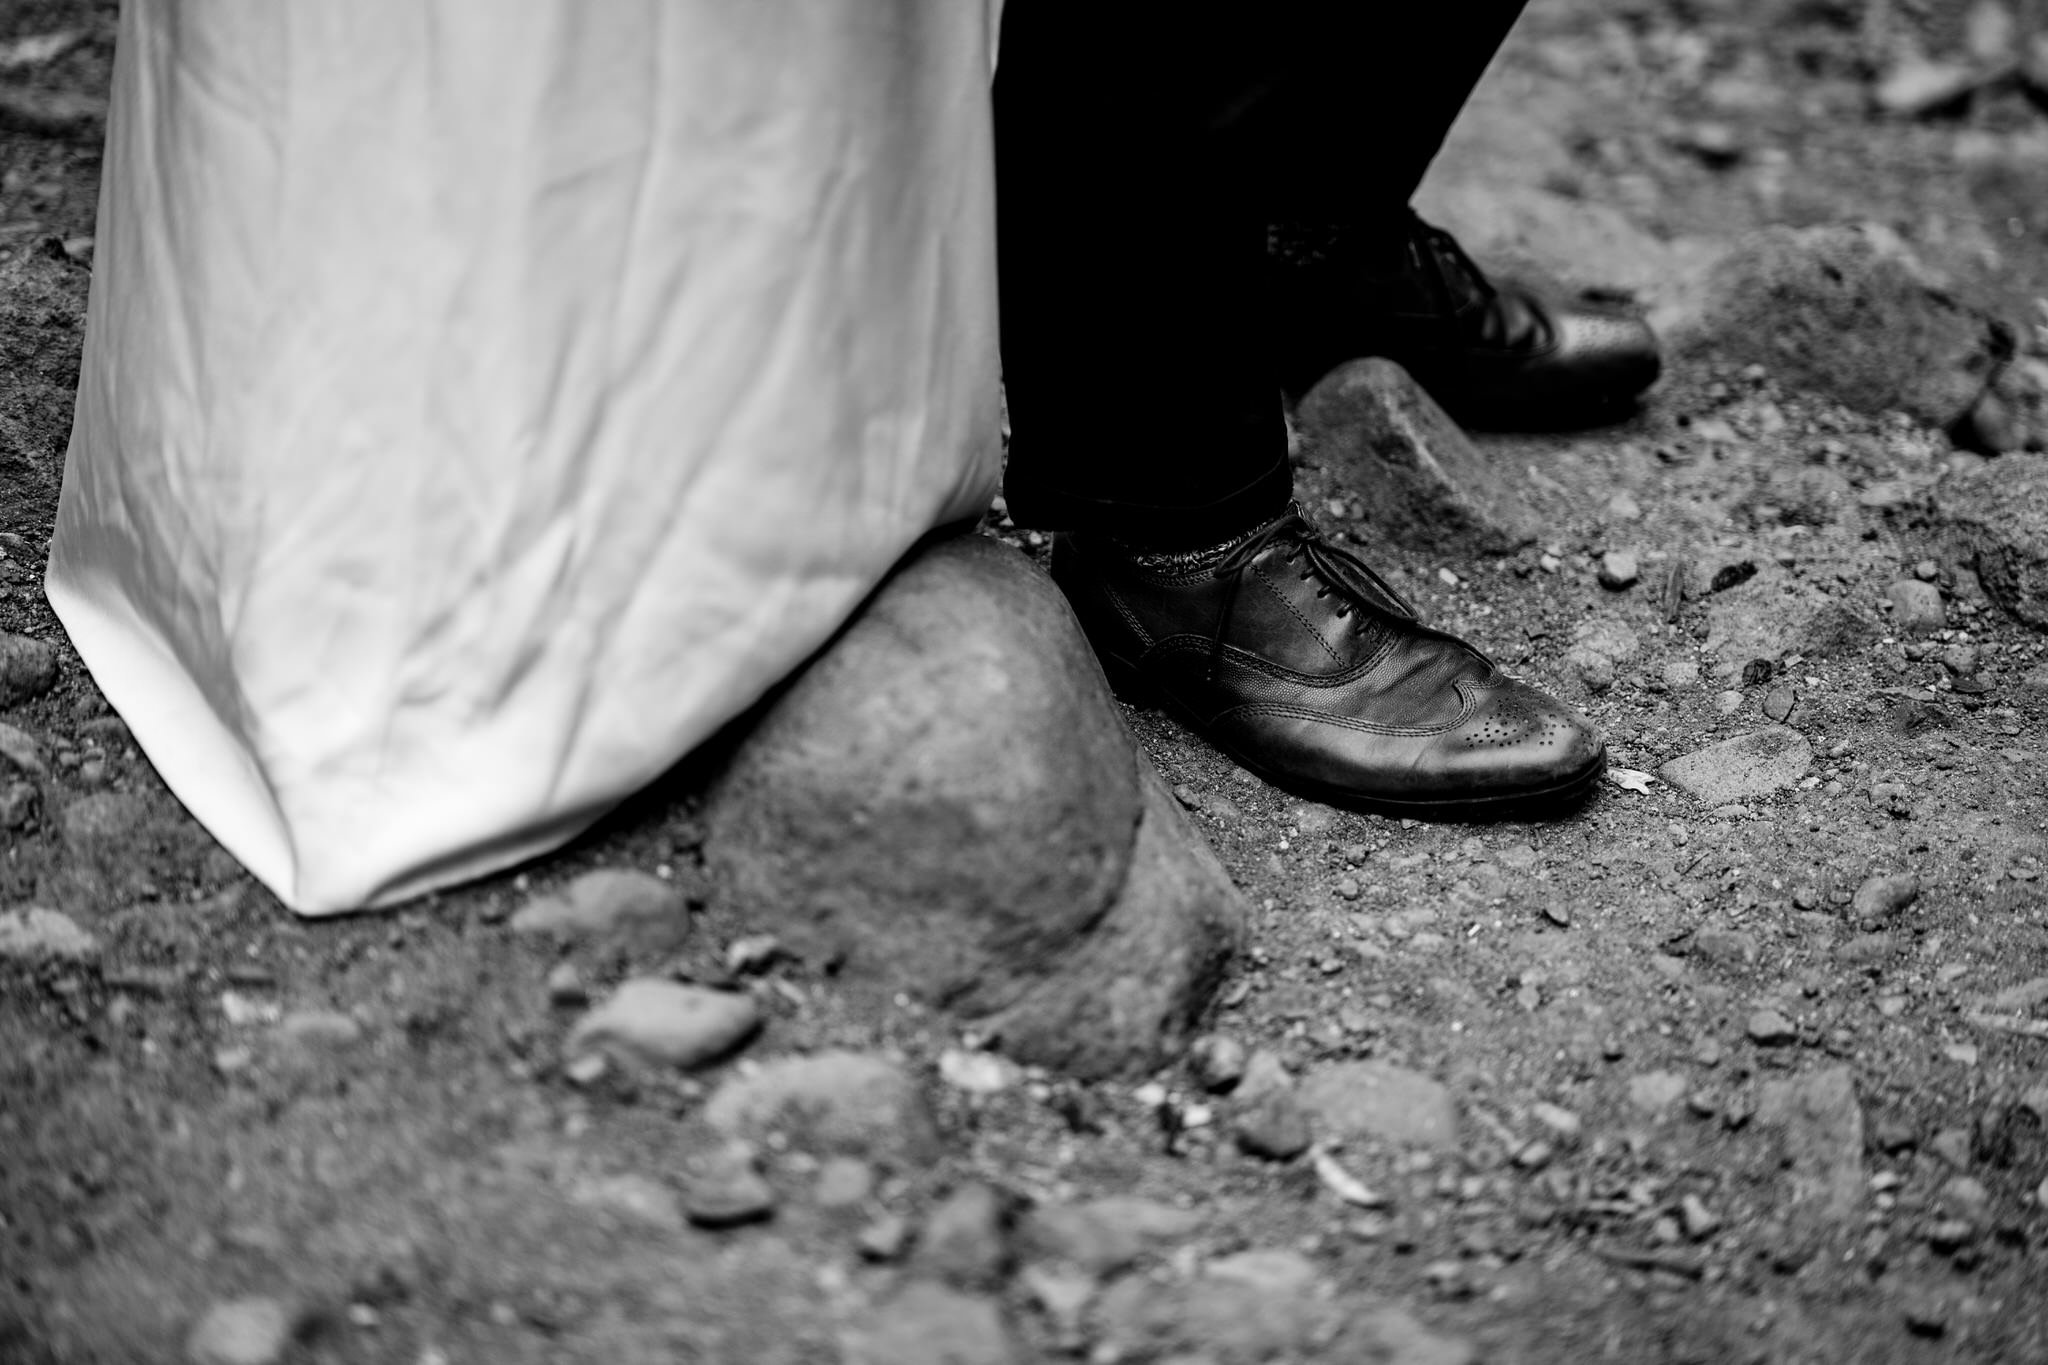 auckland-wedding-photographer-videographer-story-by-koo-koo's-jewelry-dear-white-productions-pre-wedding-engagement-photo-kare-karekare-falls-waterfall-beach-west-piha-muriwai-rain-night (14).JPG